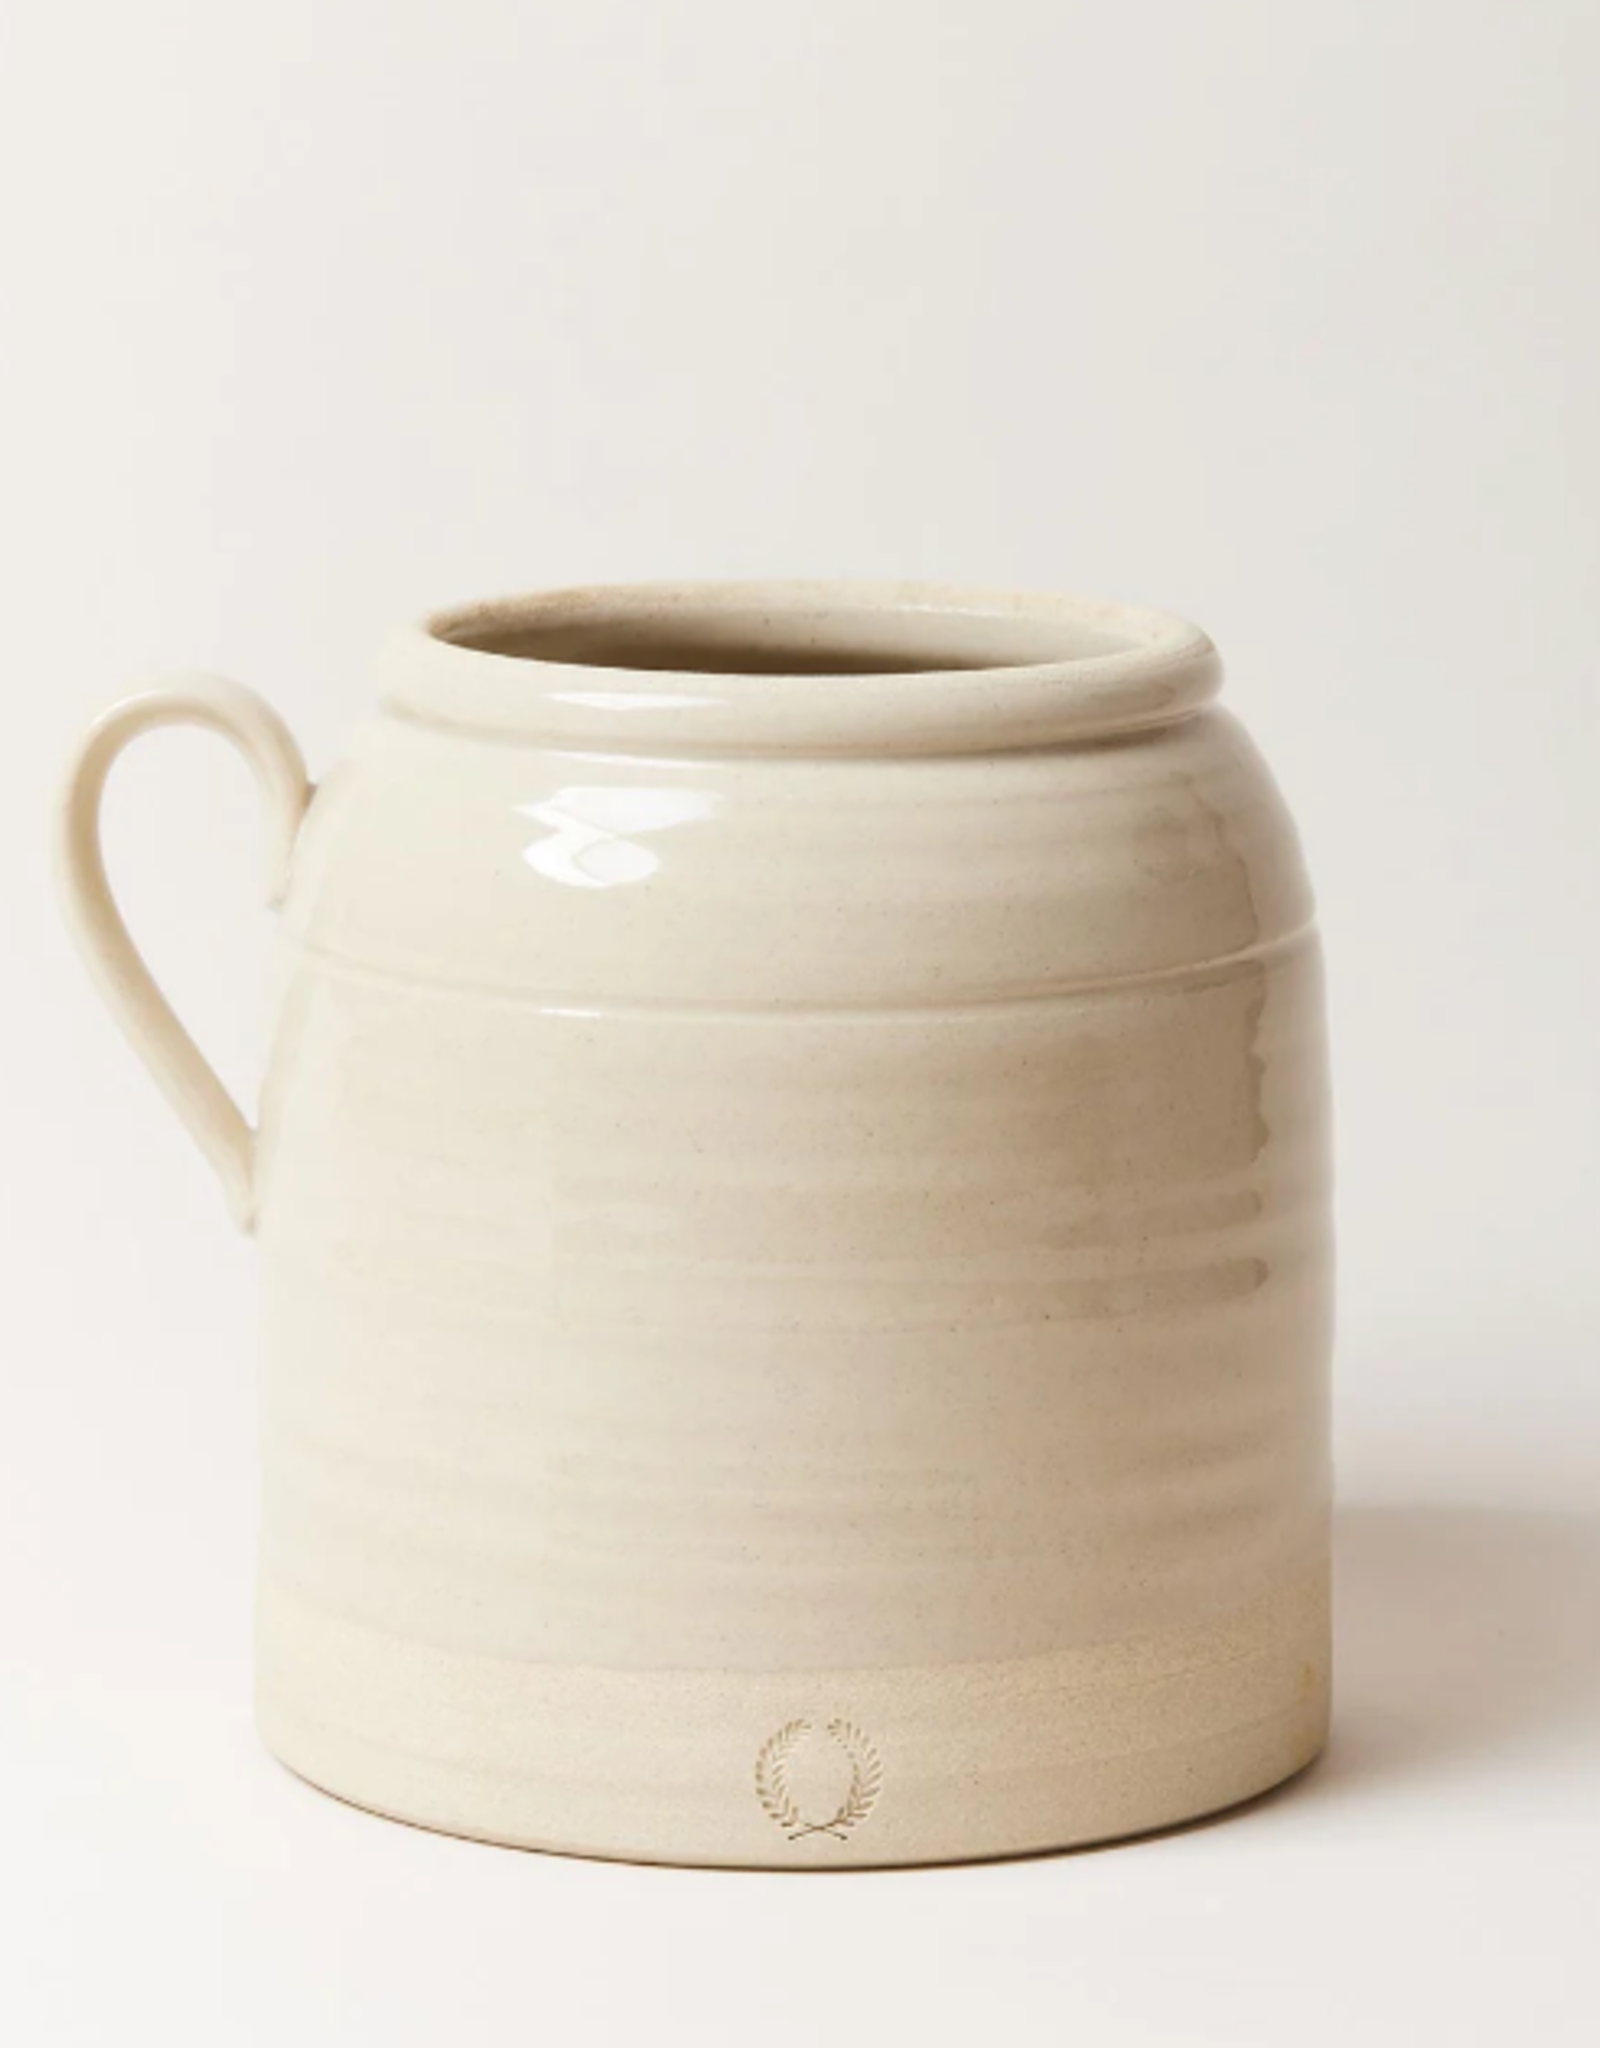 Farmhouse Pottery French Country Crock - Oat Stoneware - Medium